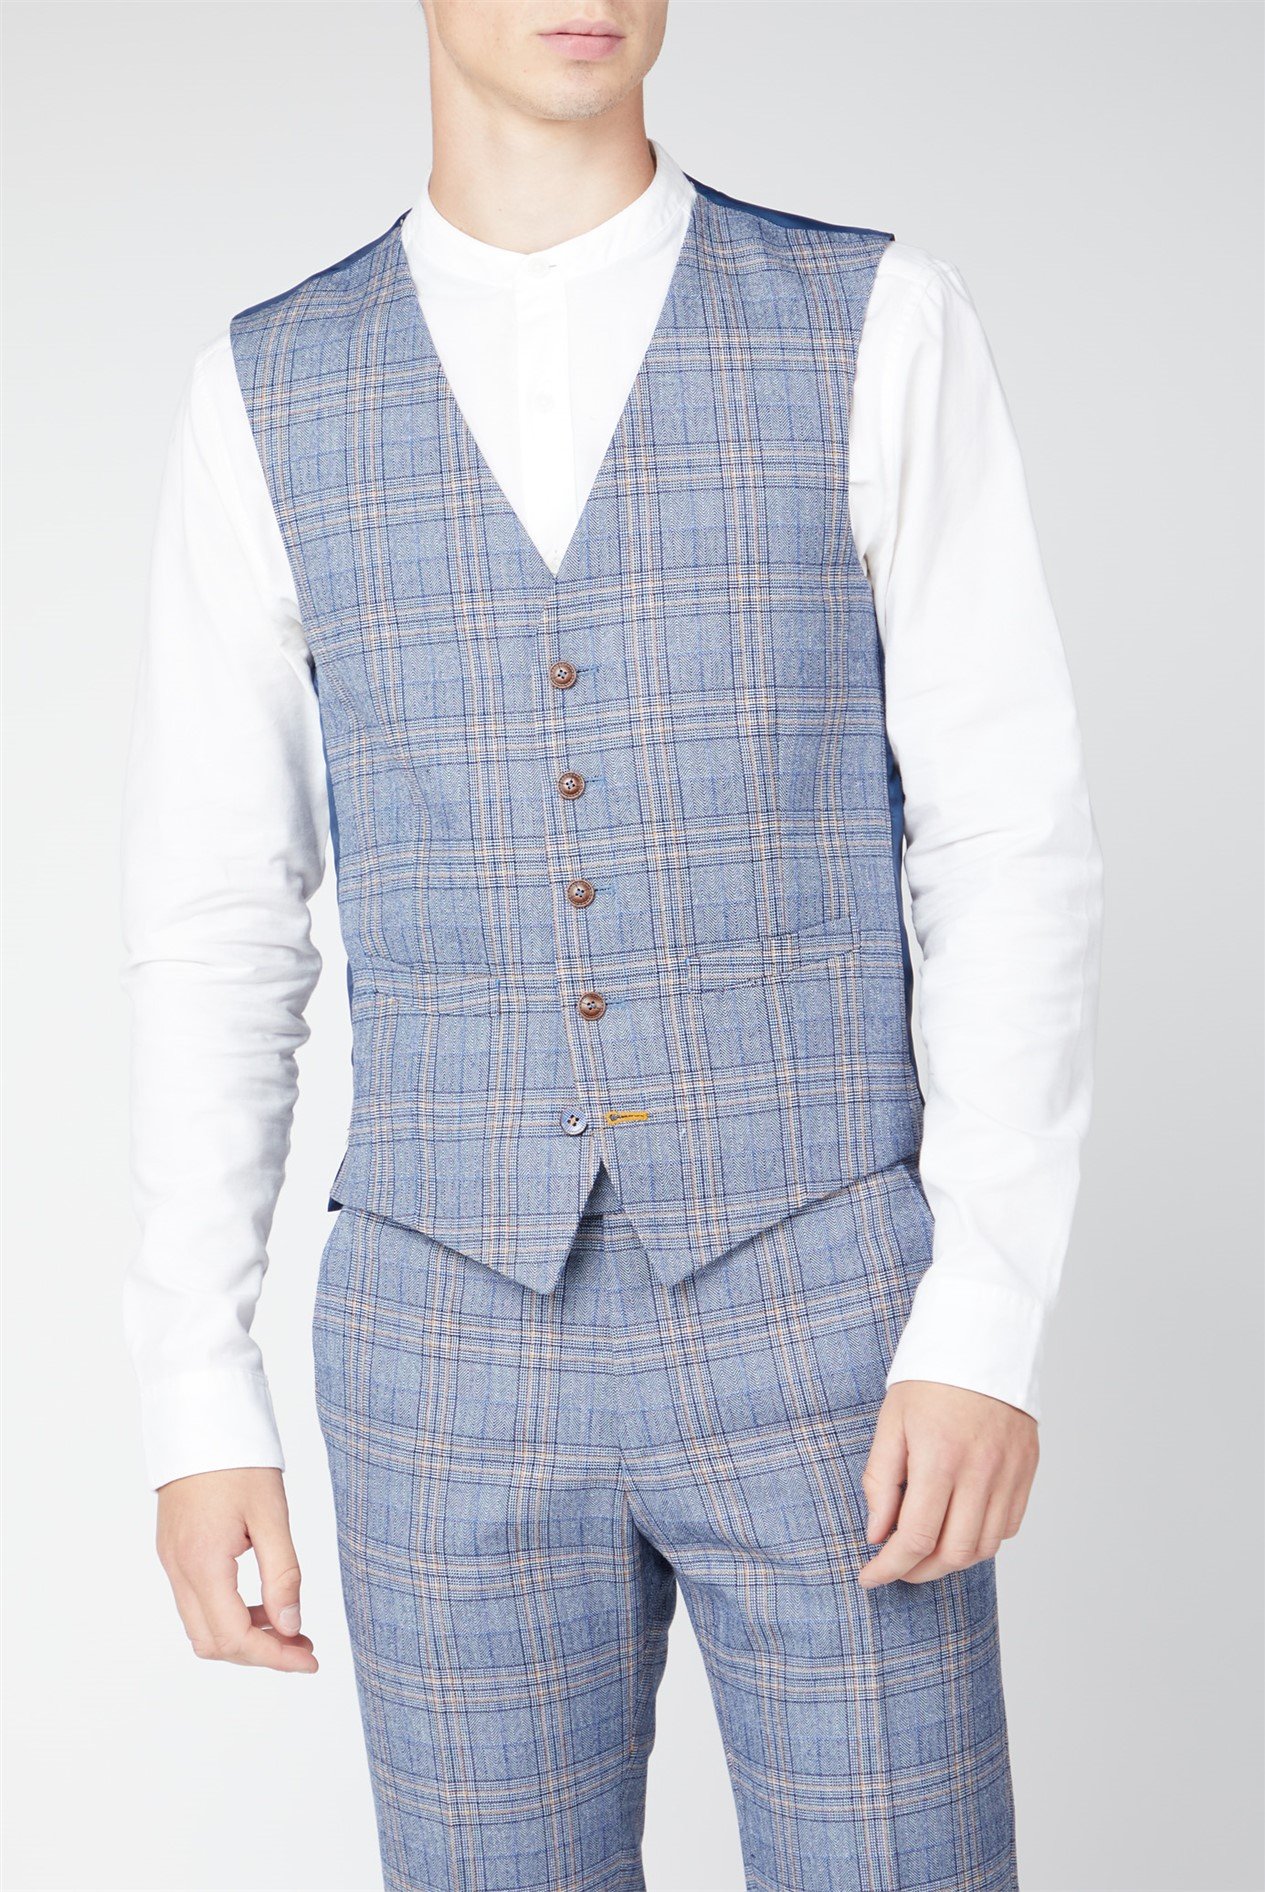 Slim Fit Light Blue Tweed Check Suit